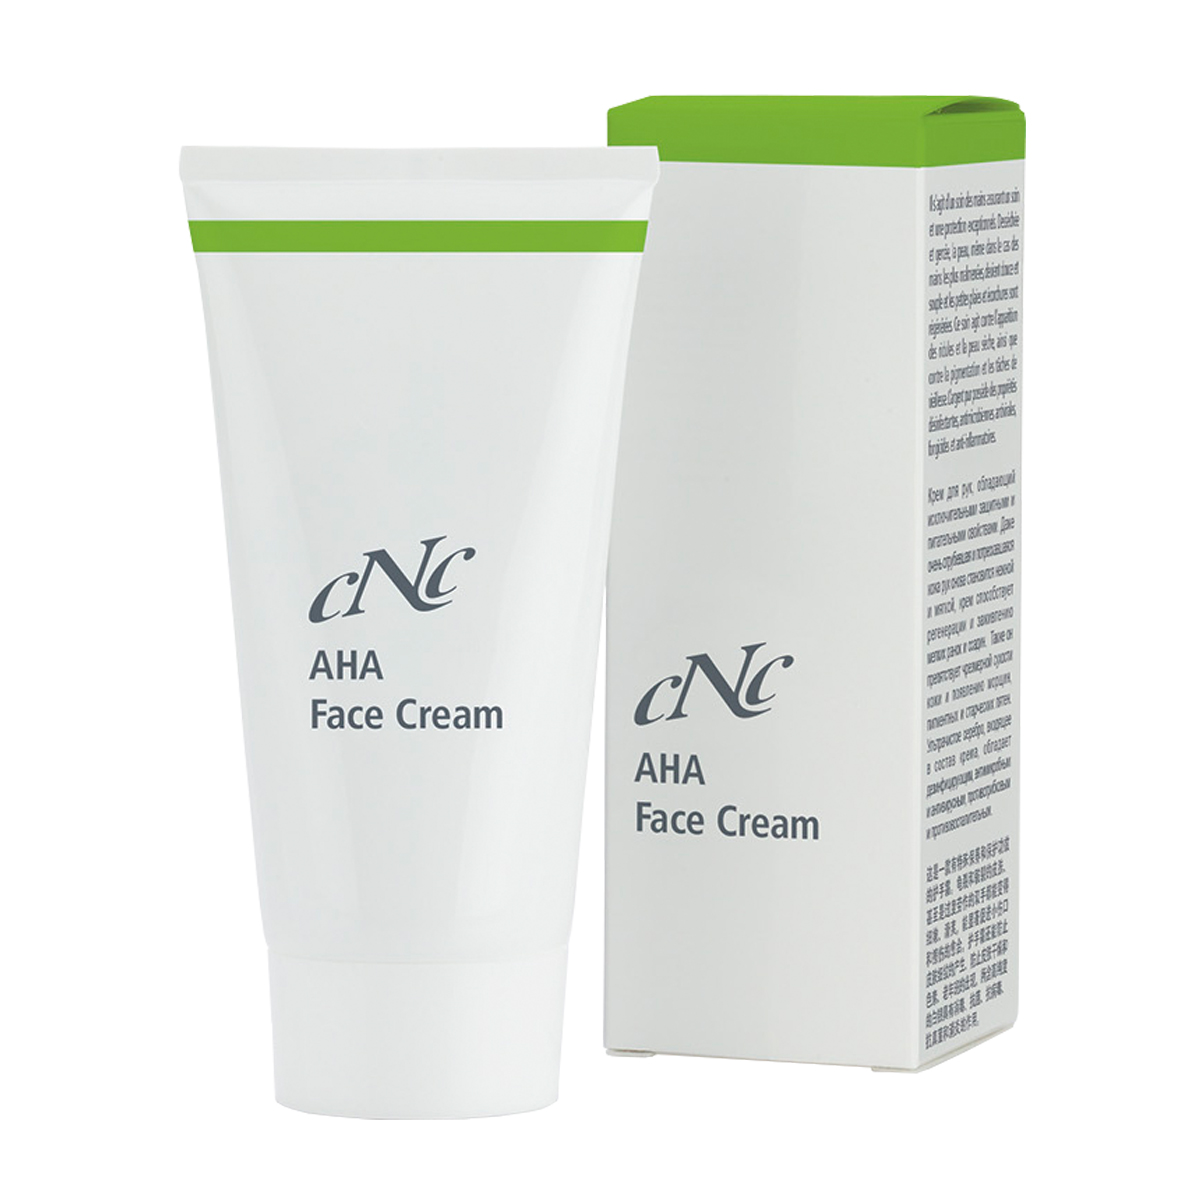 CNC Cosmetic AHA Face Cream 50 ml Gesichtscreme Mit Fruchtsäure